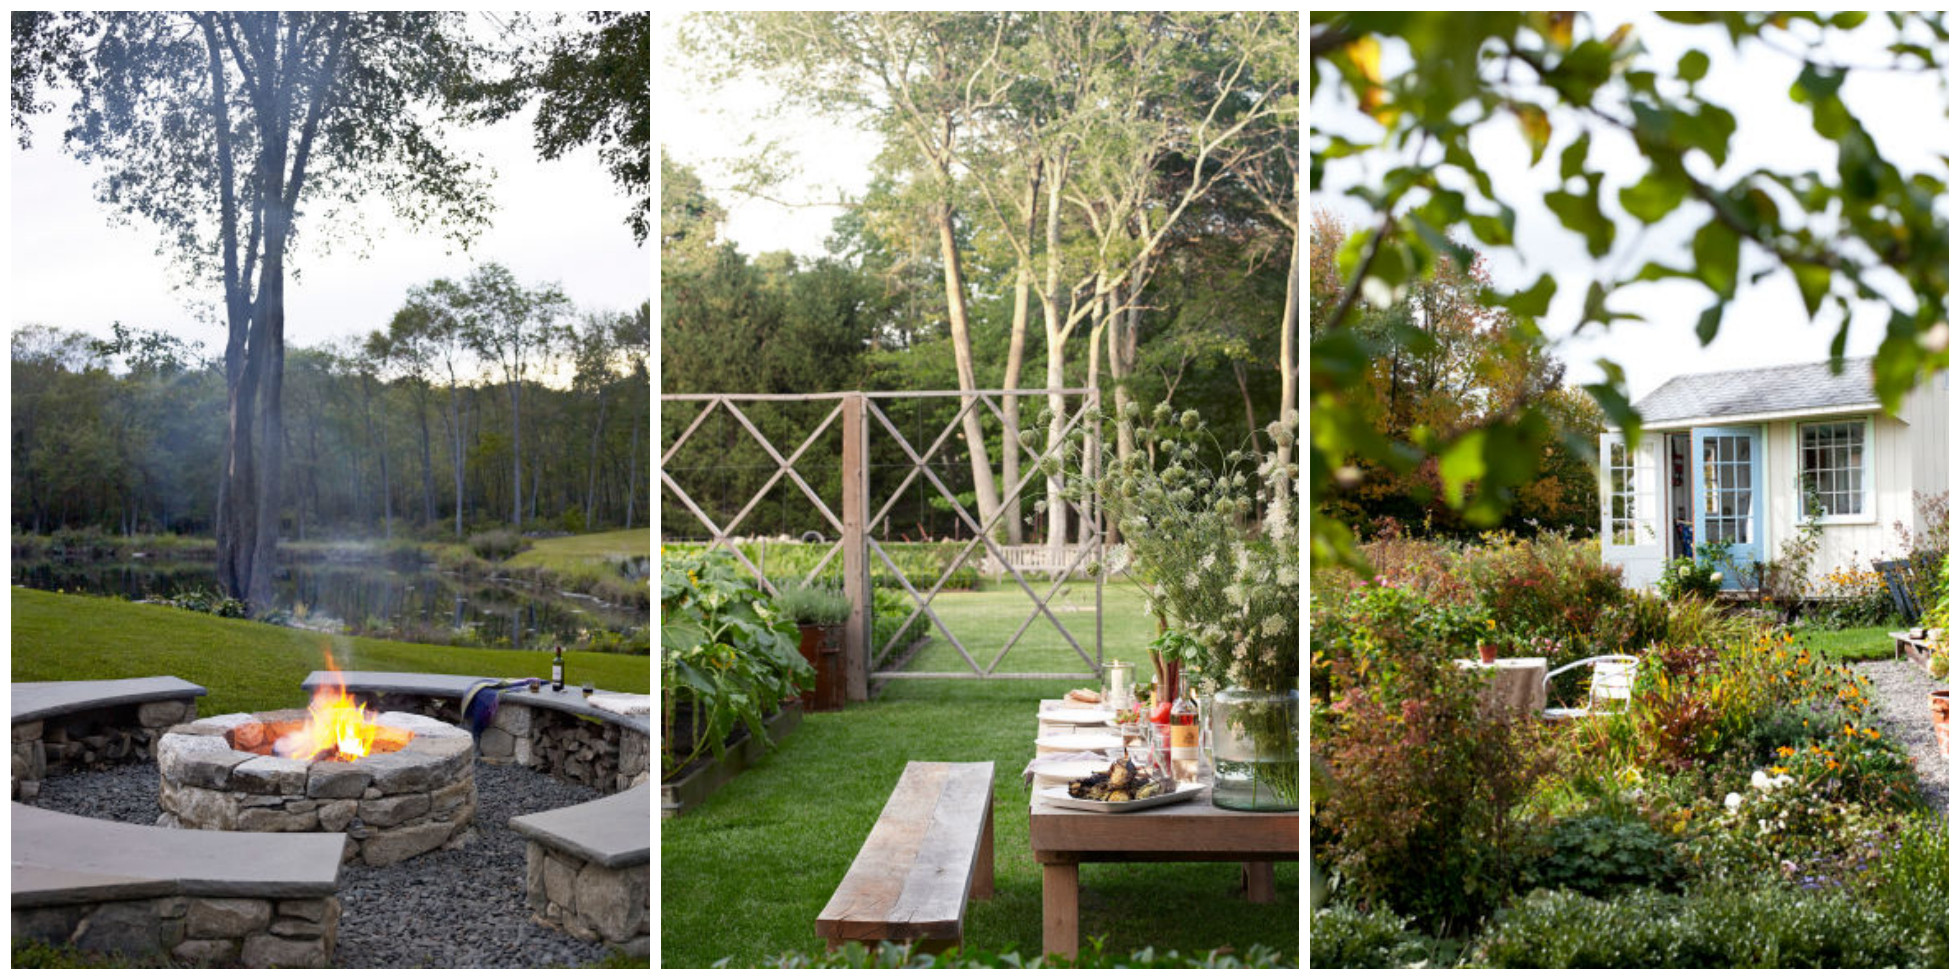 Best ideas about Backyard Landscape Designs
. Save or Pin 21 Backyard Design Ideas Beautiful Yard Inspiration Now.